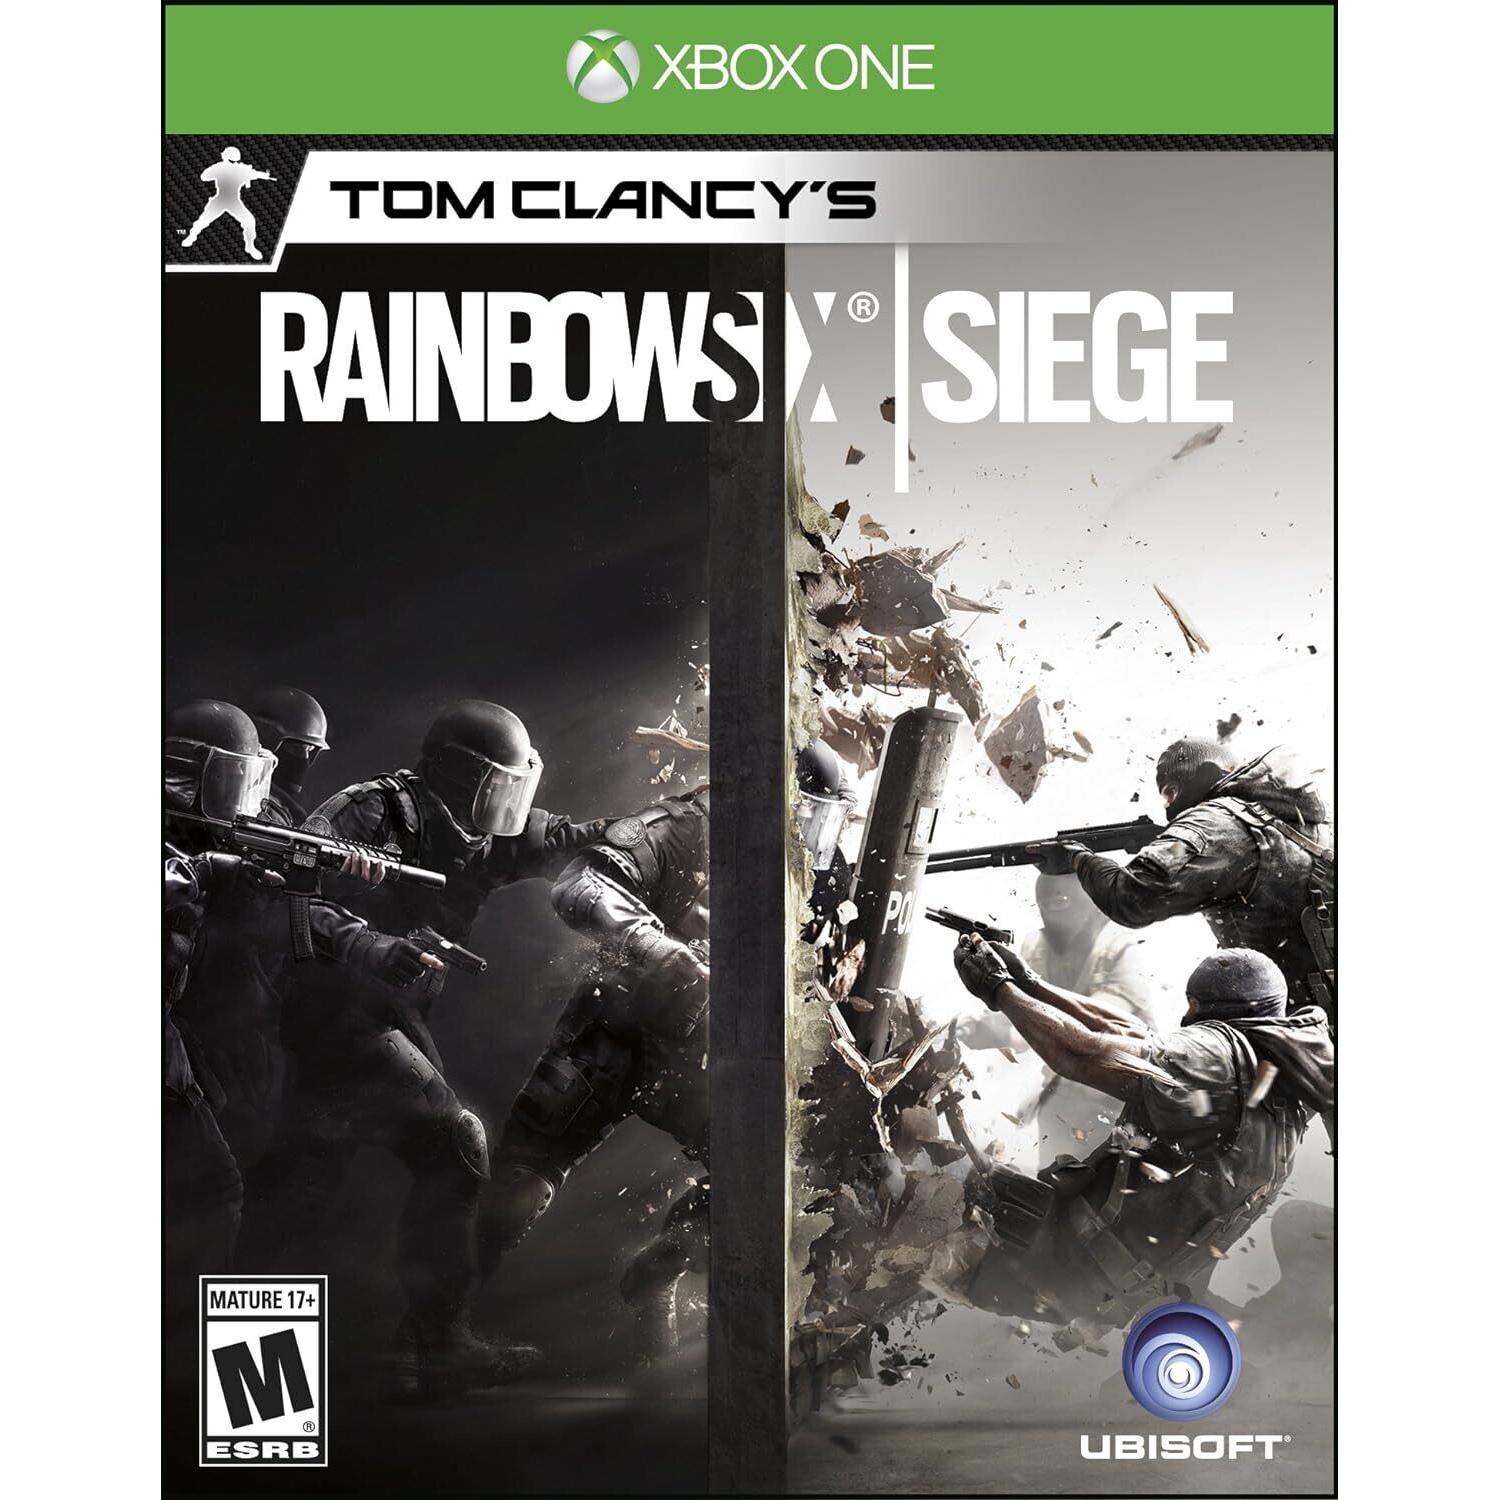 Tom Clancy's Rainbow Six Siege for Xbox One [VIDEOGAMES]